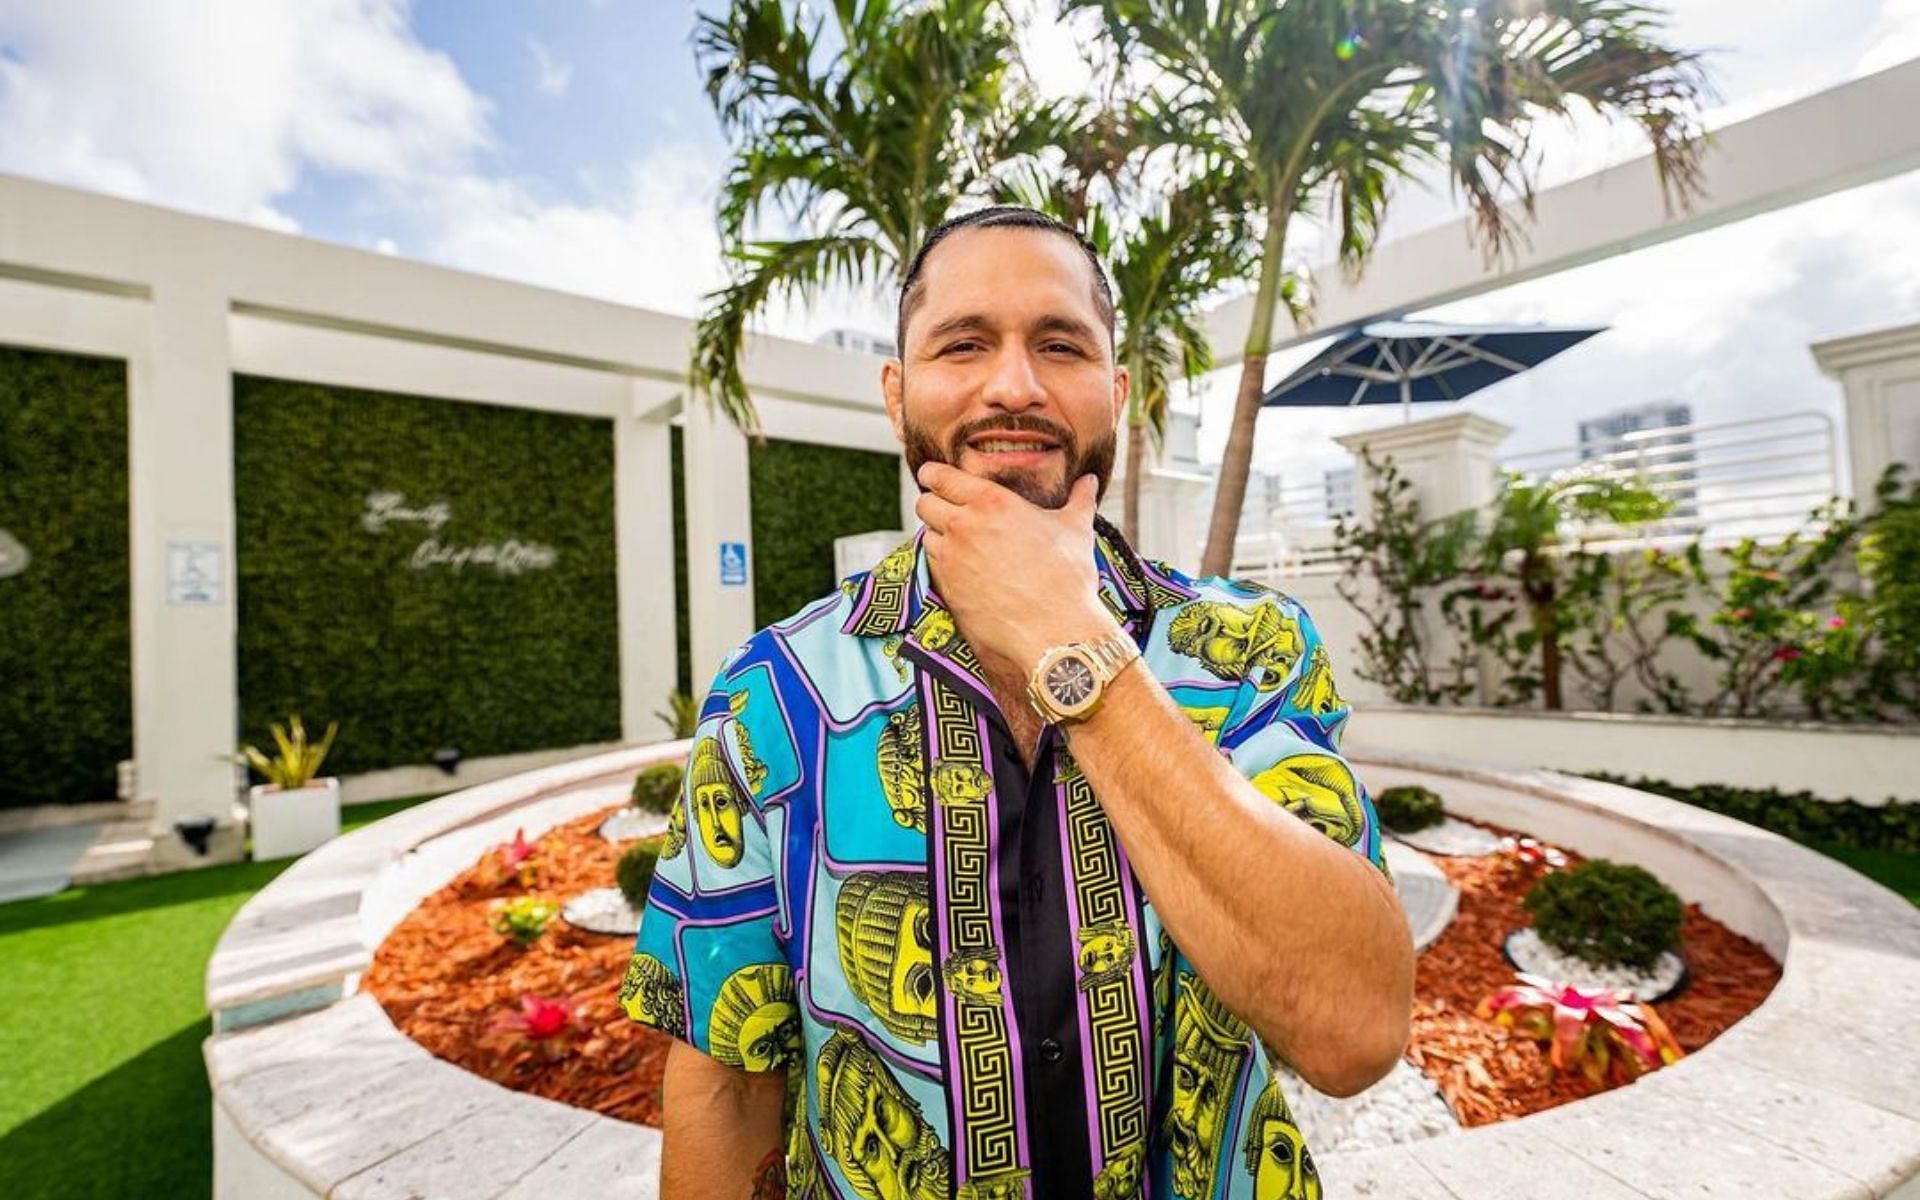 Jorge Masvidal posing in front of his residence (Image courtesy @gamebredfighter on Instagram)